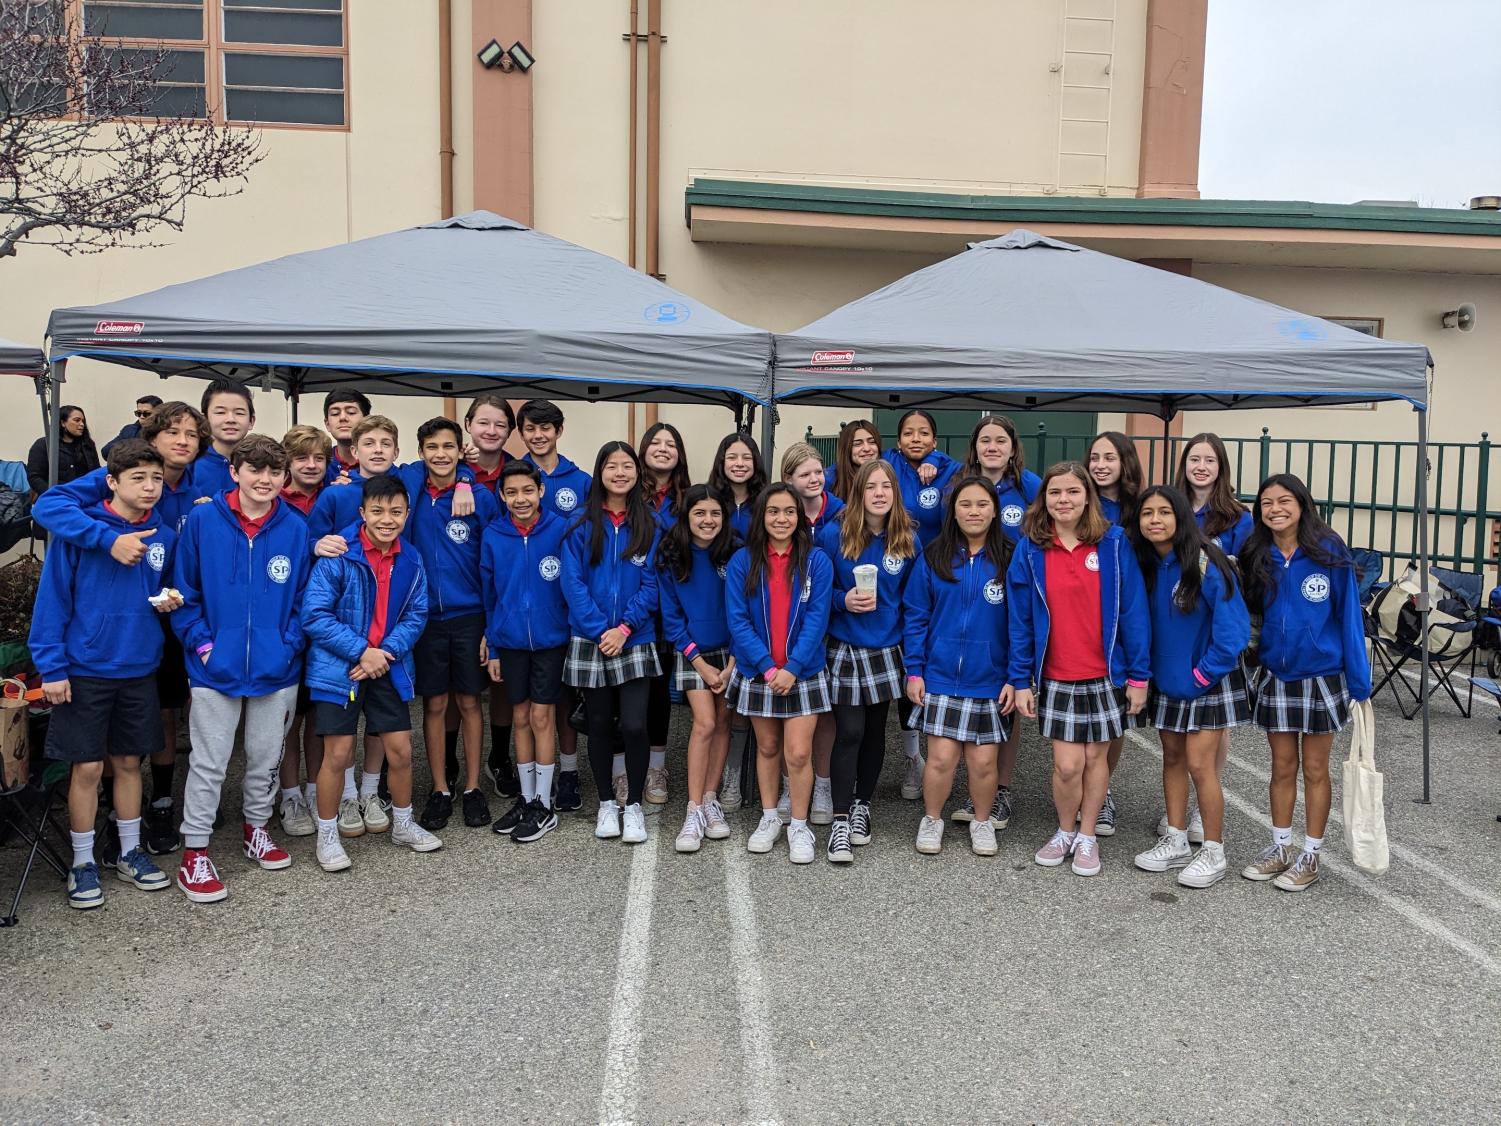 Corpus Christi School Places 10th in LA Junior High Academic Decathlon -  Palisades News